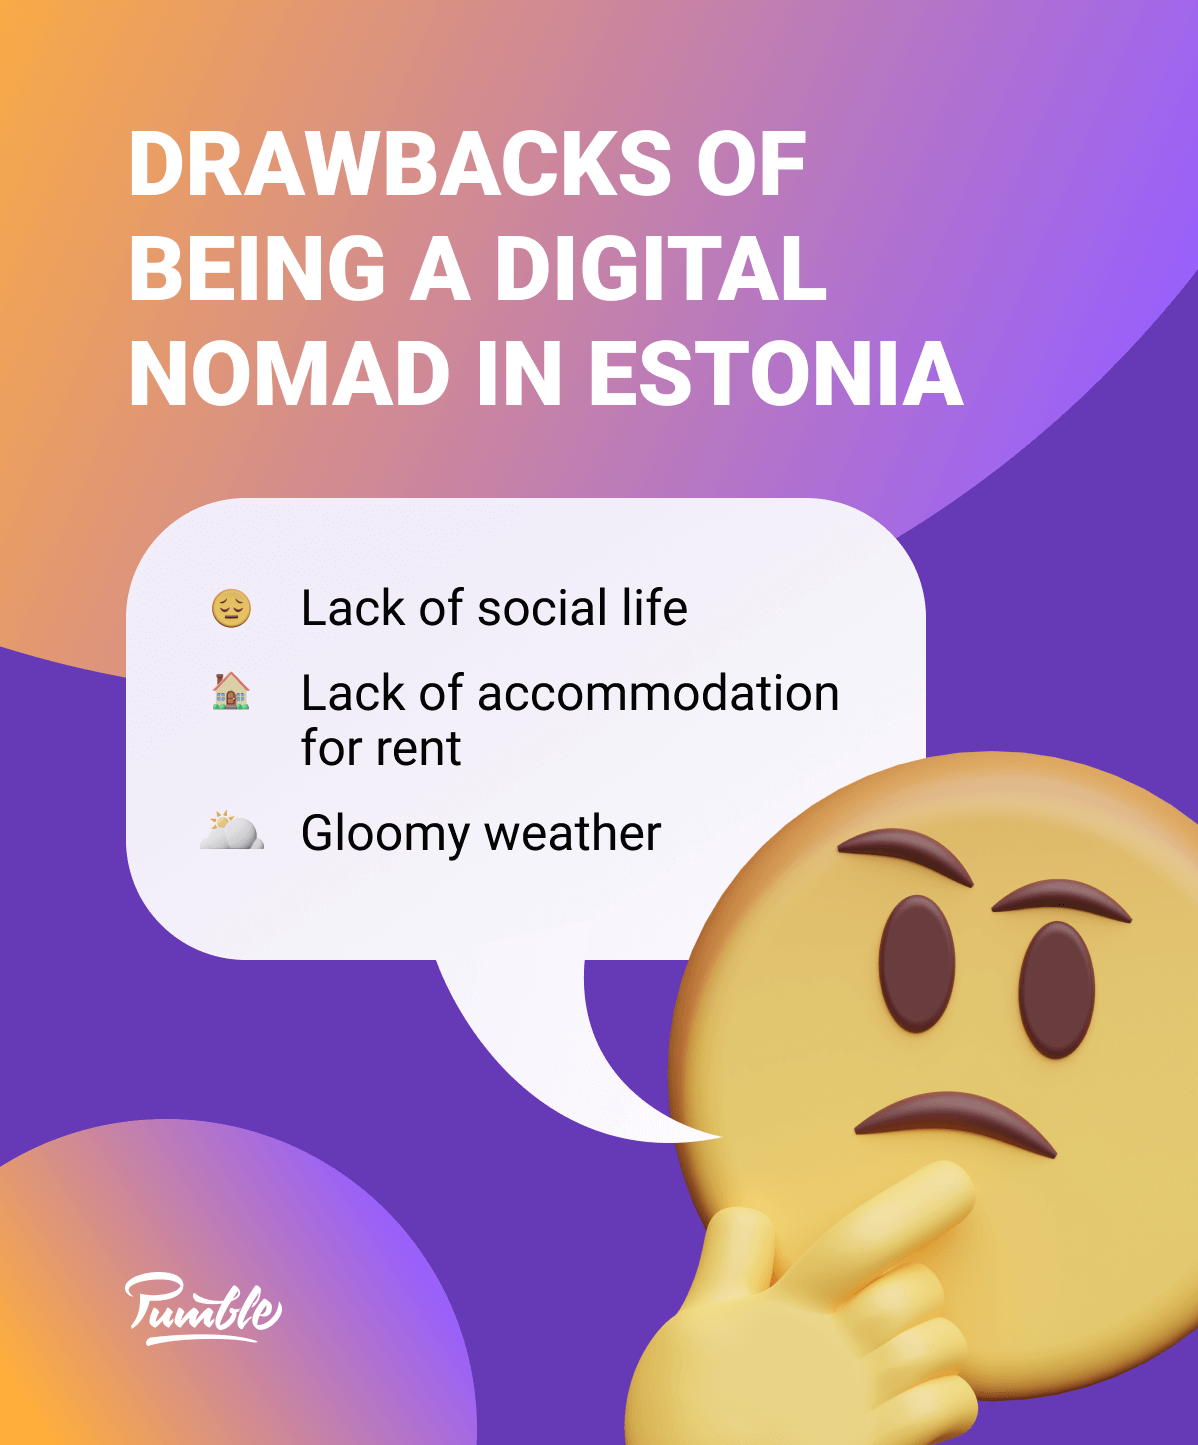 Drawbacks of being a digital nomad in Estonia